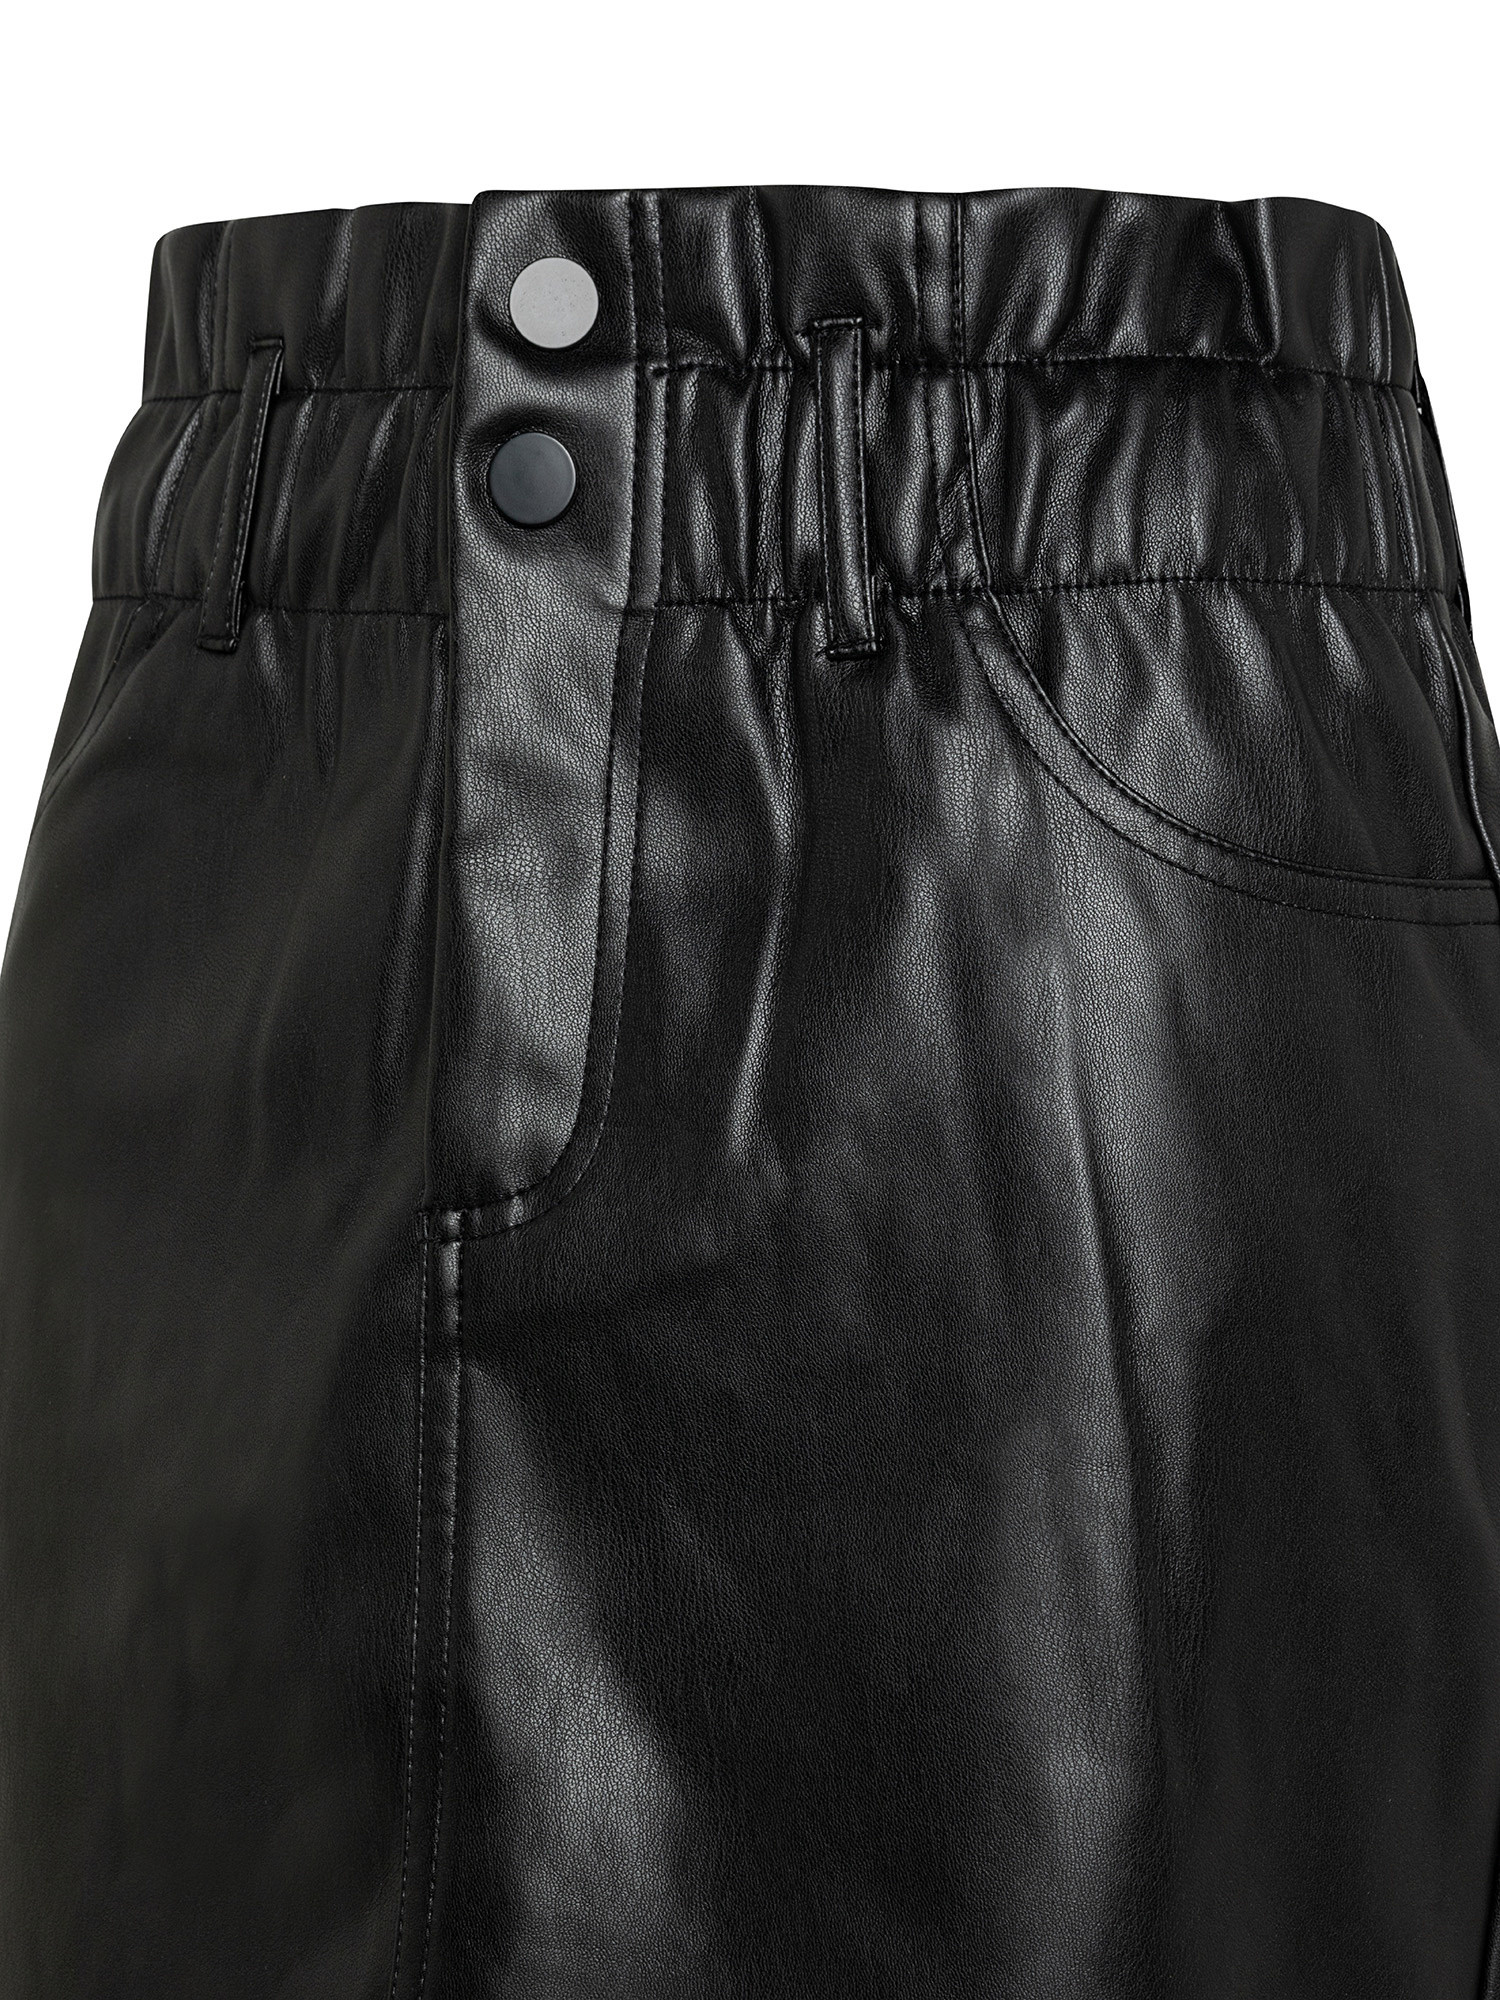 faux leather skirt, Black, large image number 2